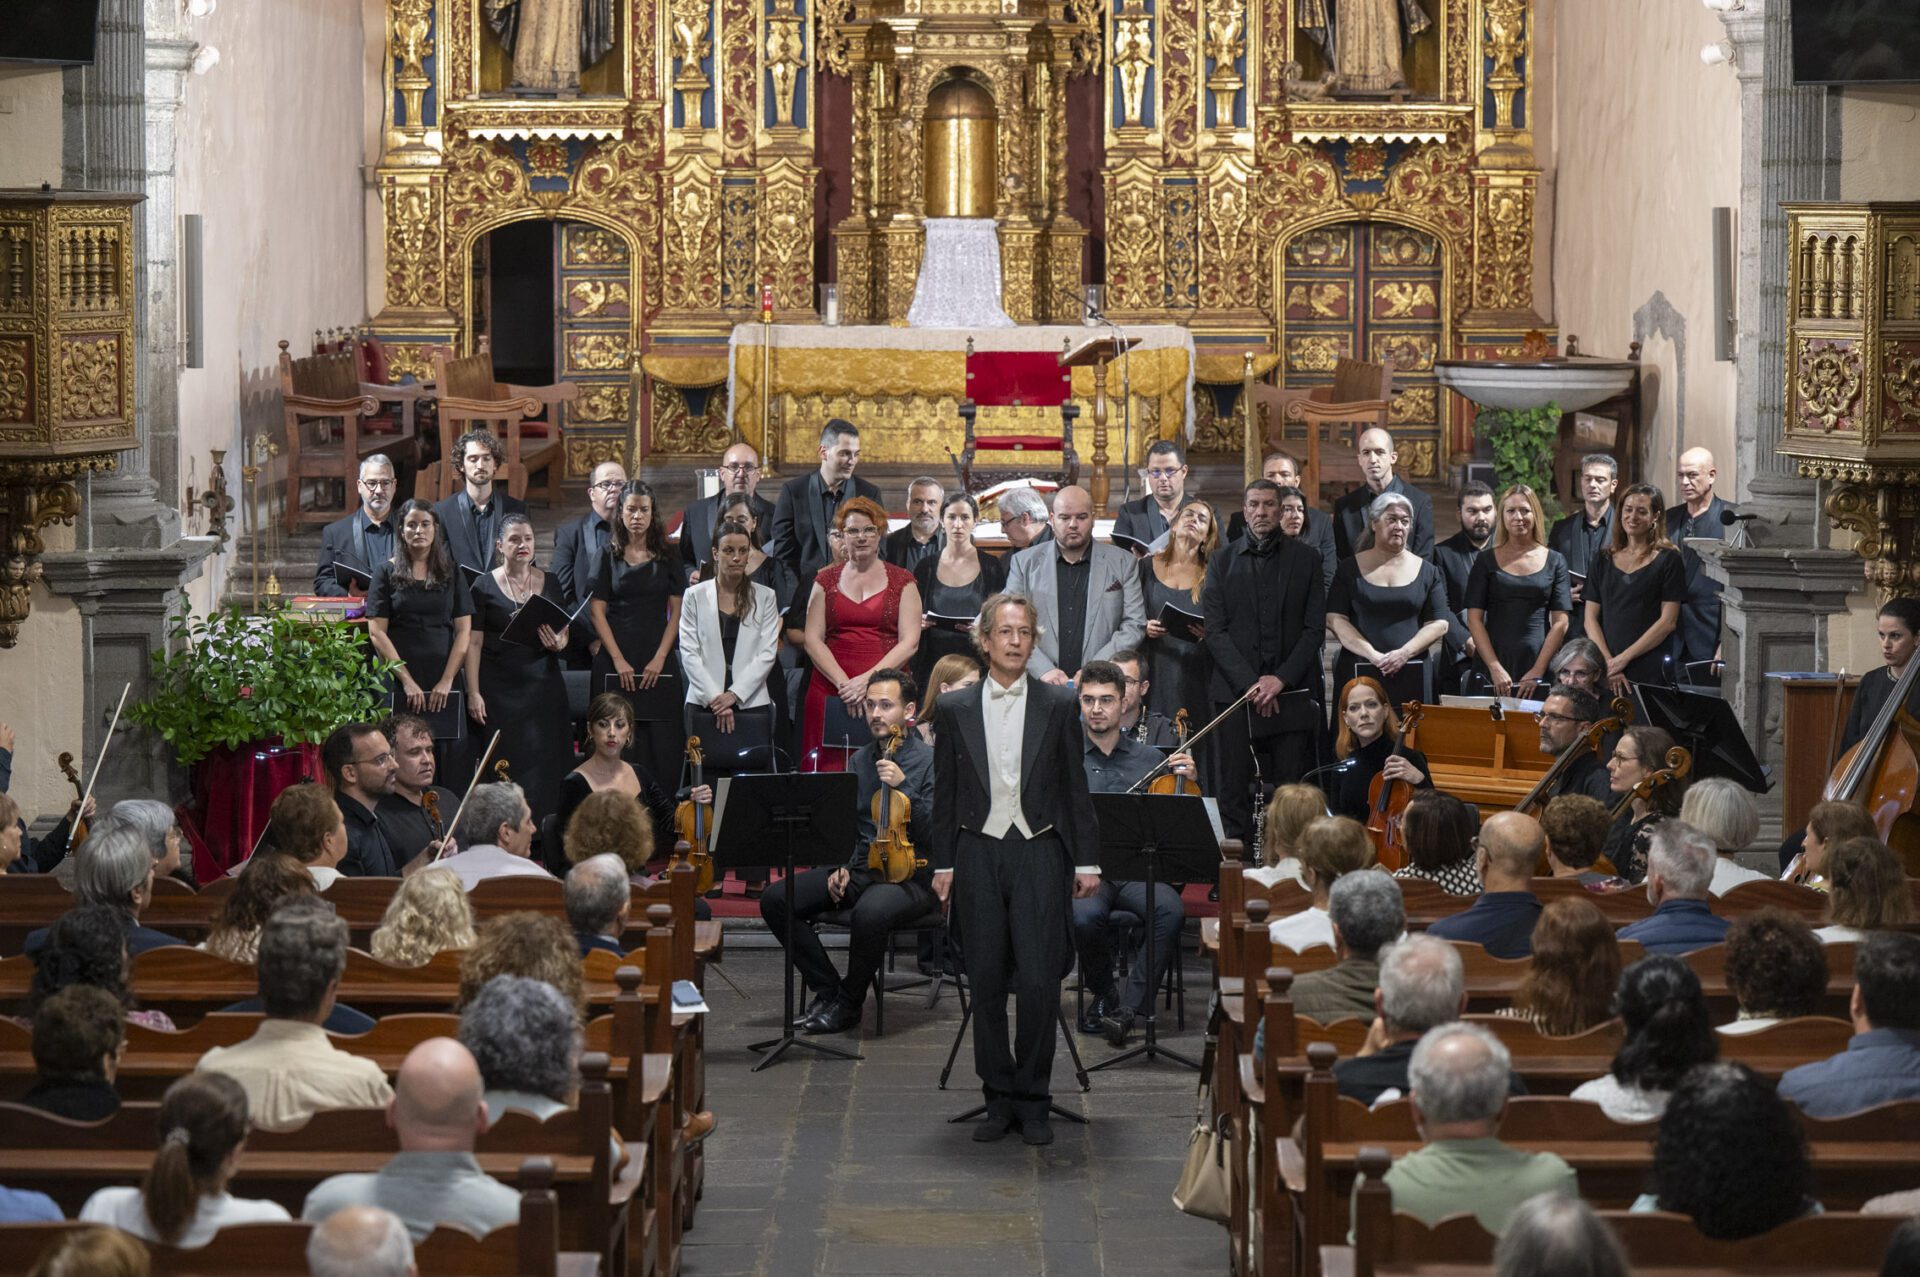 Stabat Mater, obra cumbre religiosa de Haydn, llega a Tenerife los días 17 y 18 de febrero